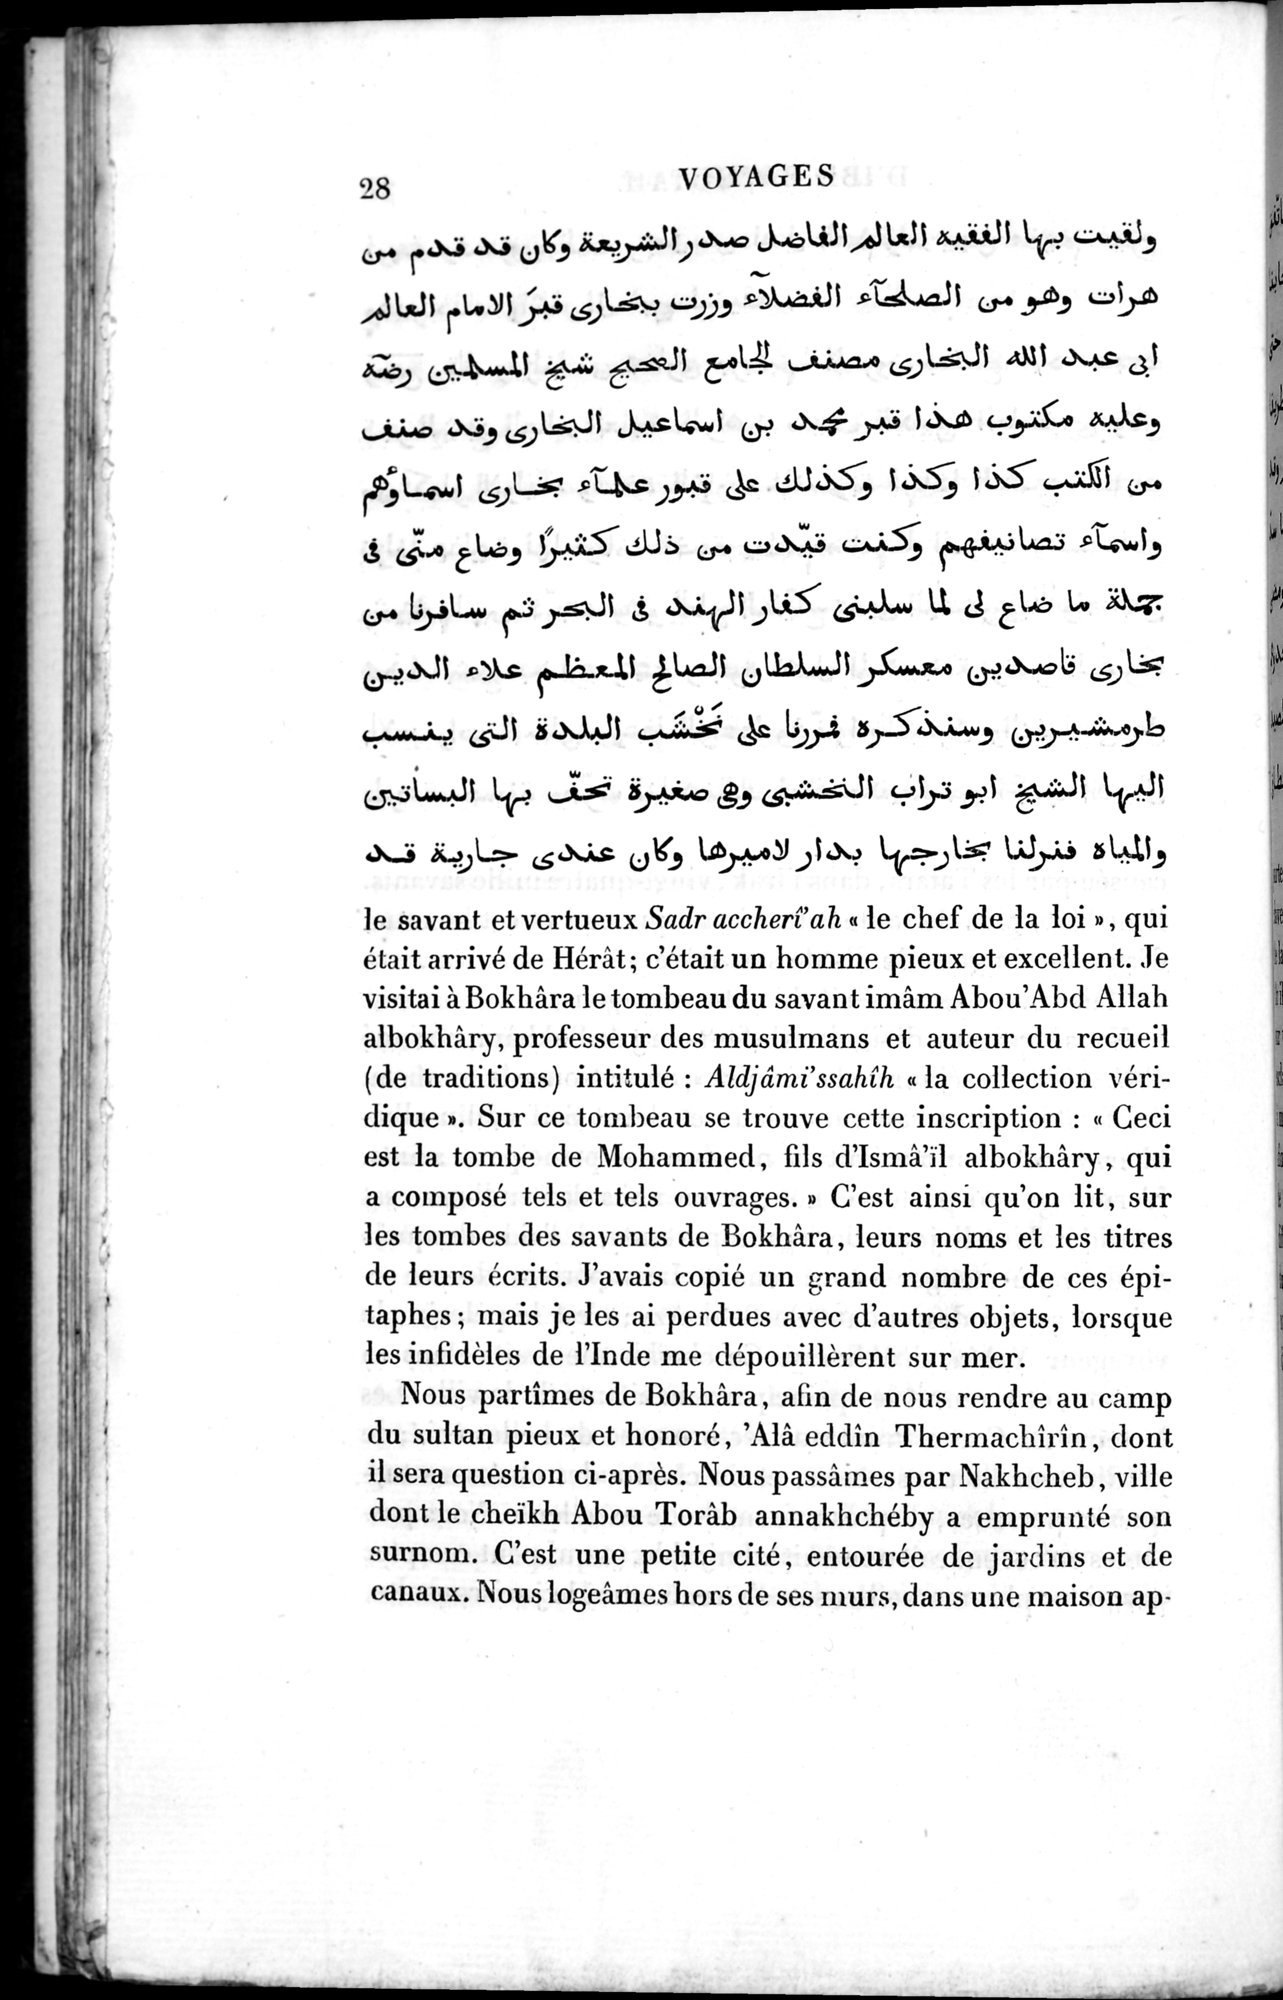 Voyages d'Ibn Batoutah : vol.3 / 68 ページ（白黒高解像度画像）